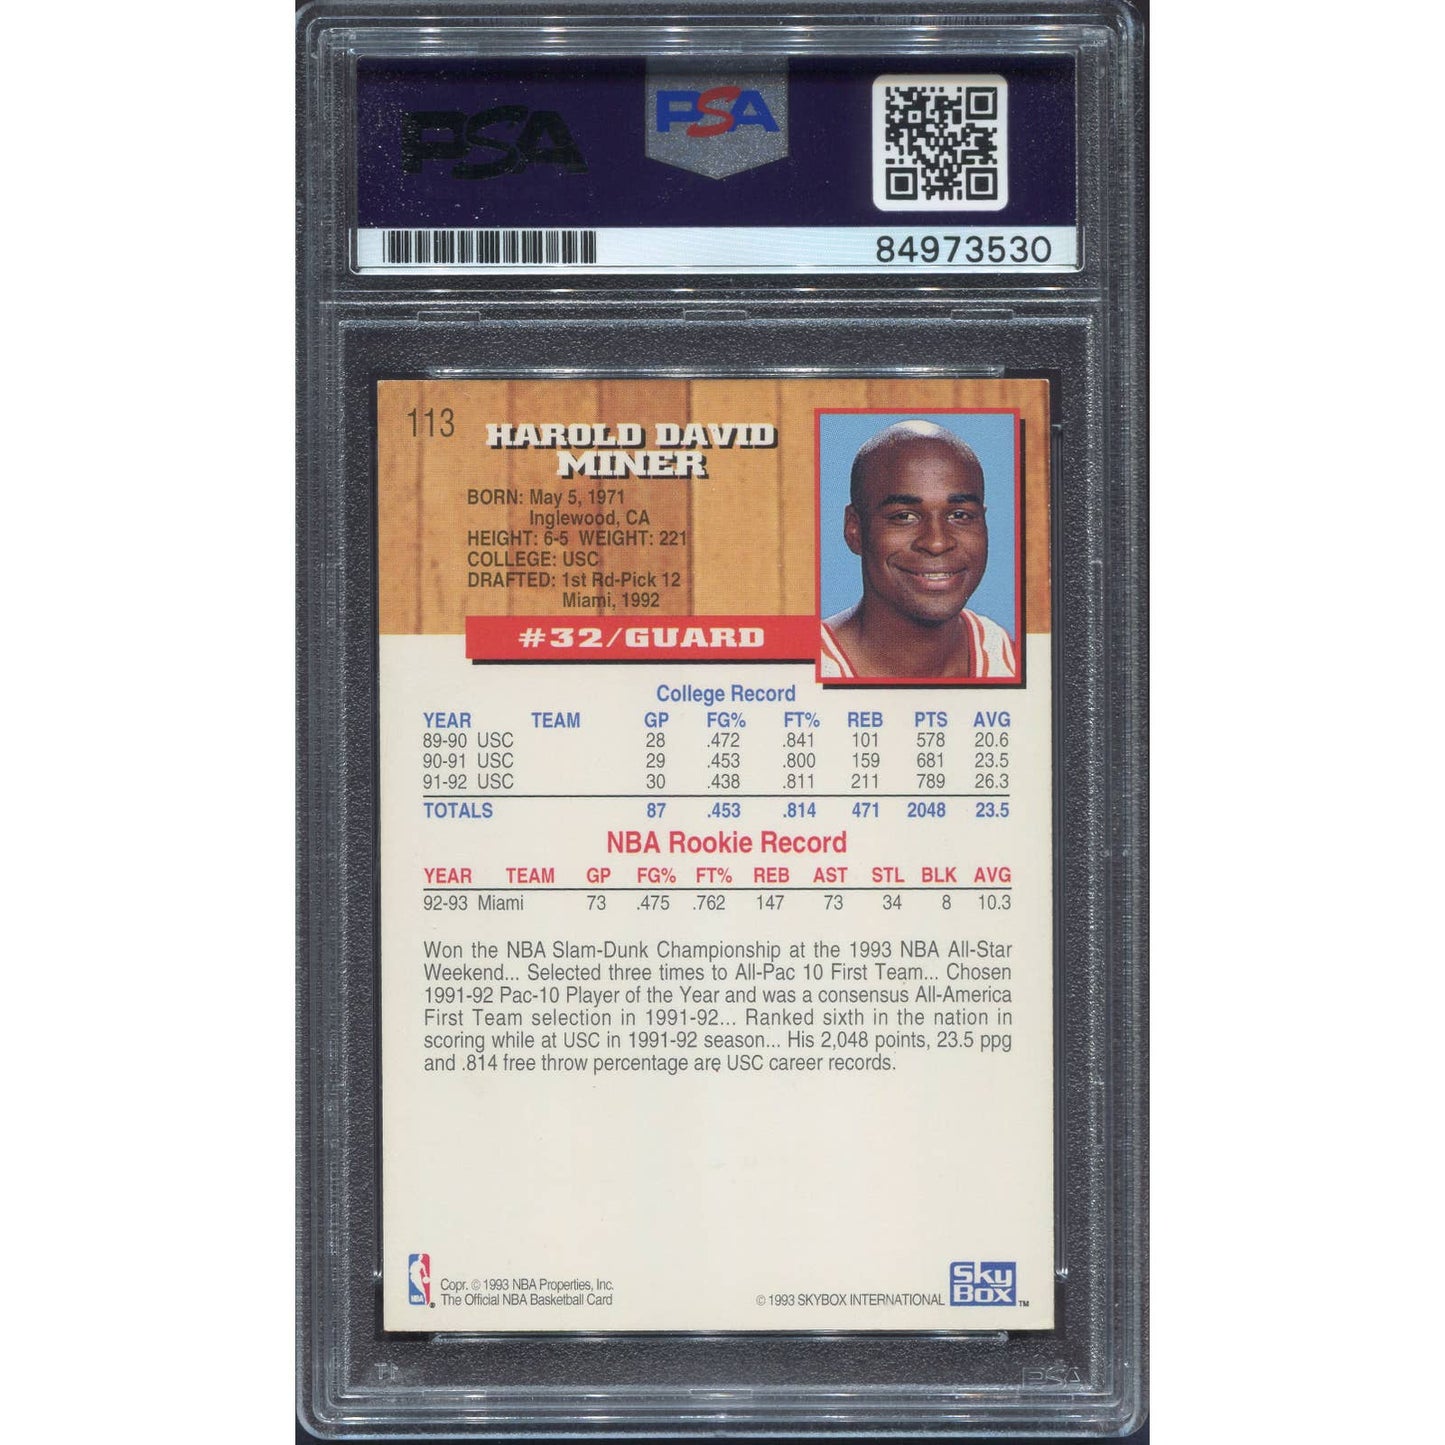 1993-94 NBA Hoops Harold Miner Signed Card Miami Heat Autograph PSA/DNA